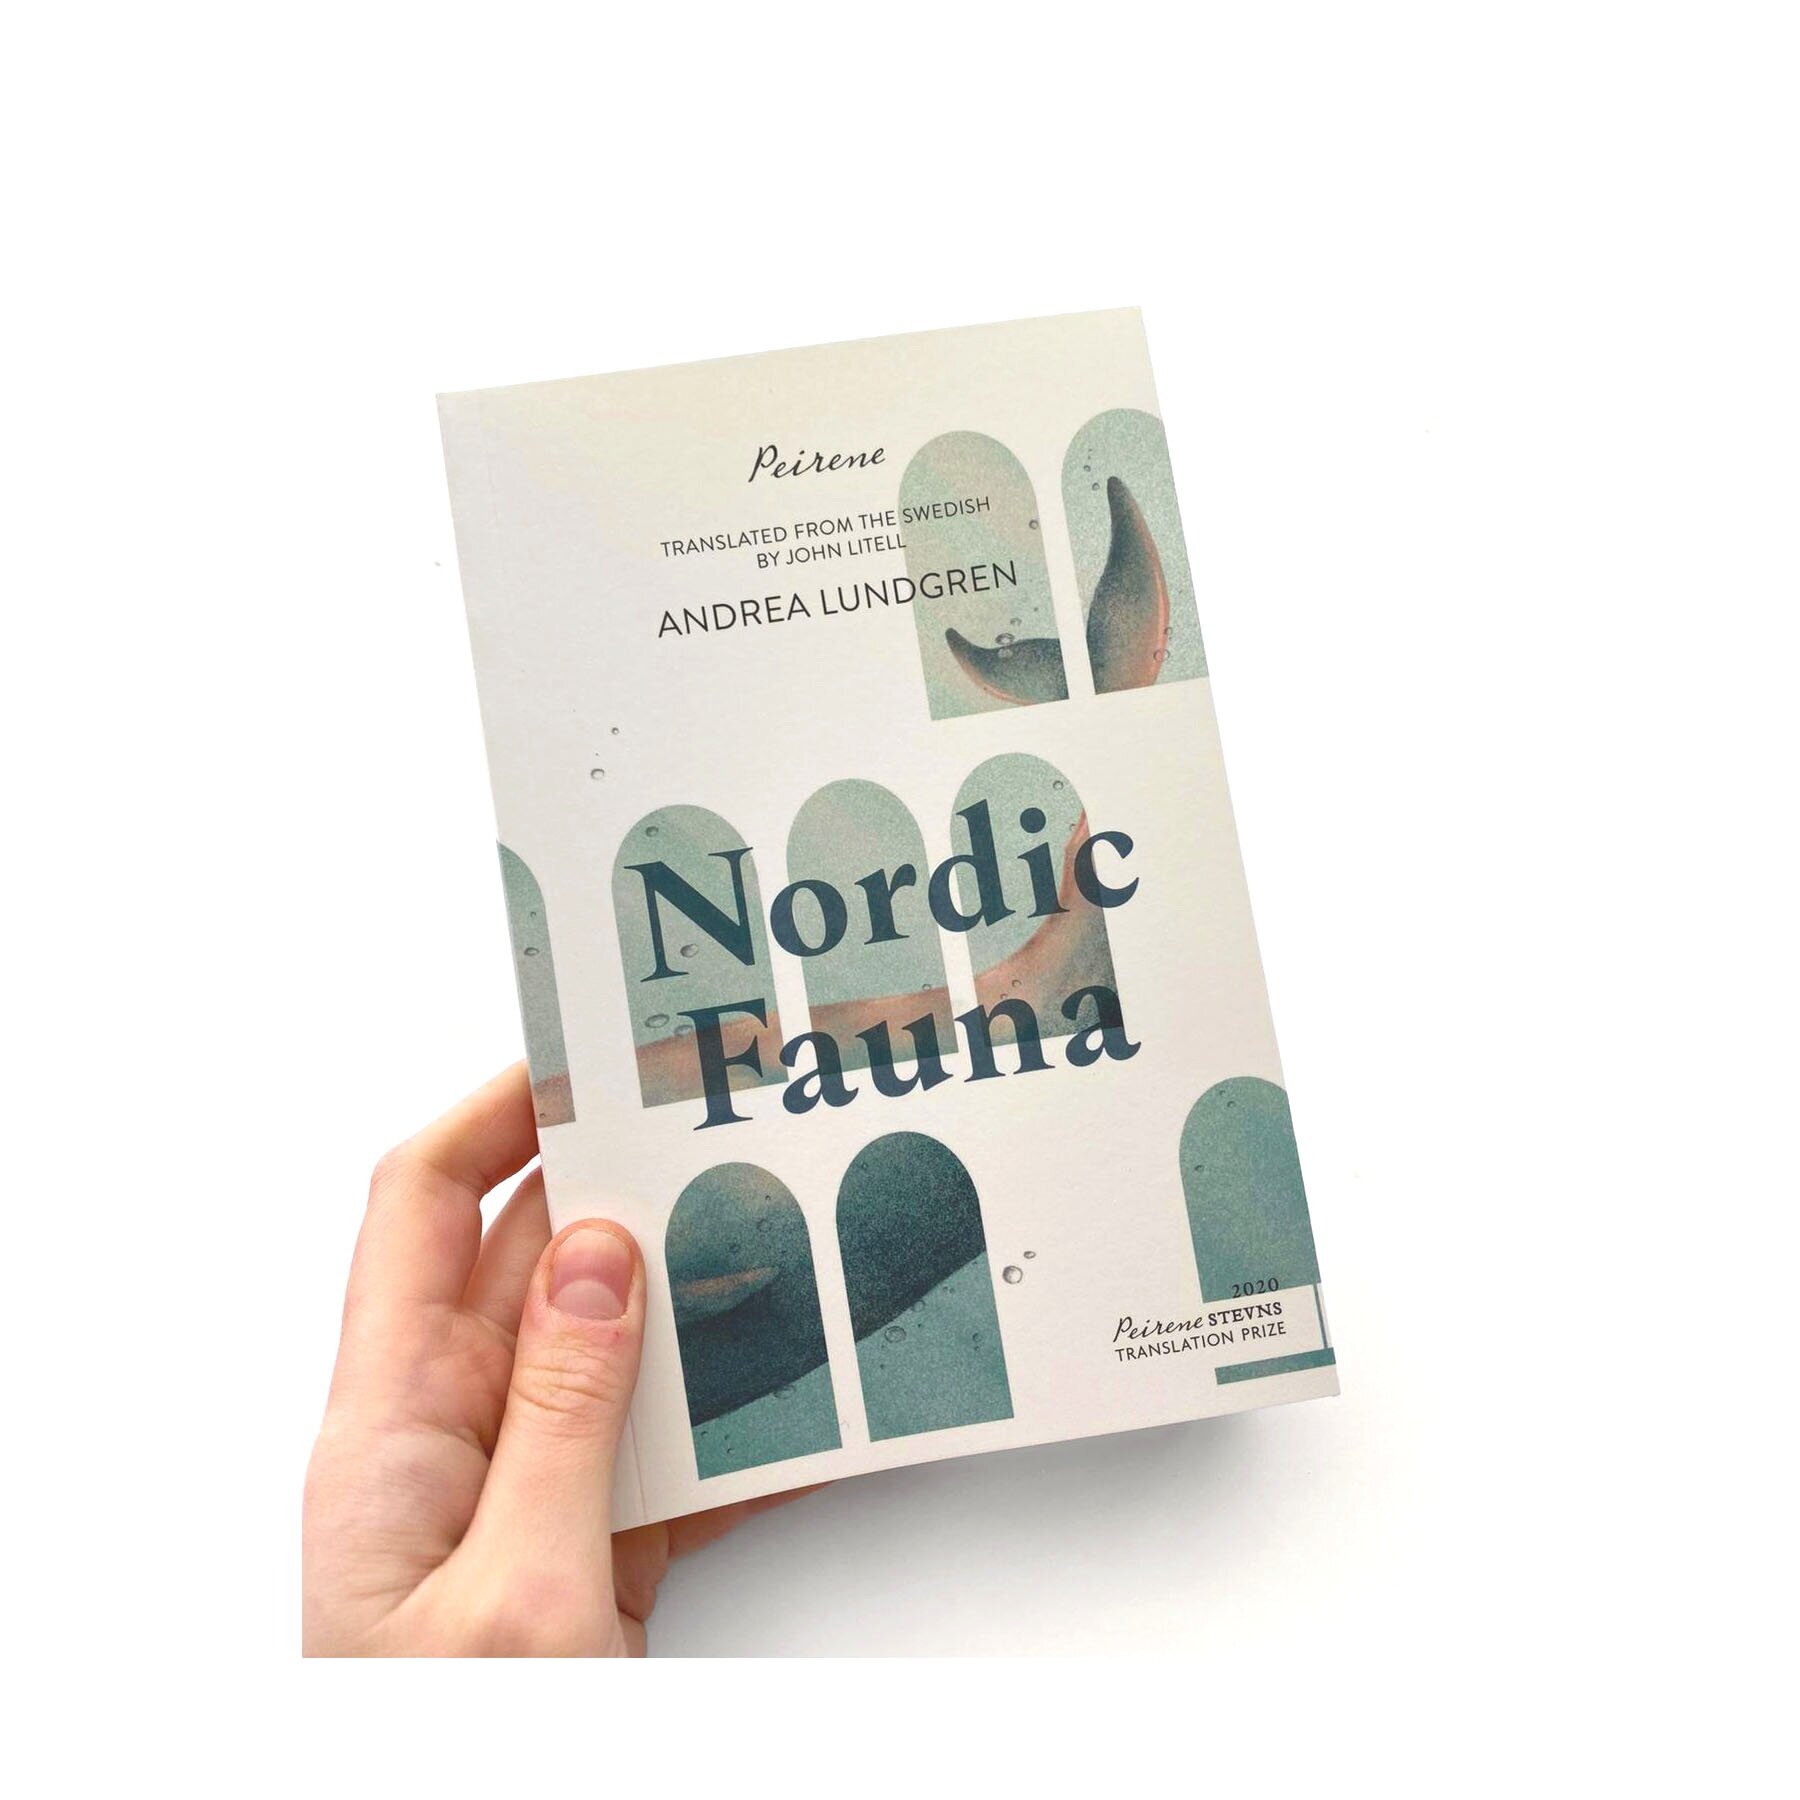 Nordic+Fauna+Photo+Edited.jpg